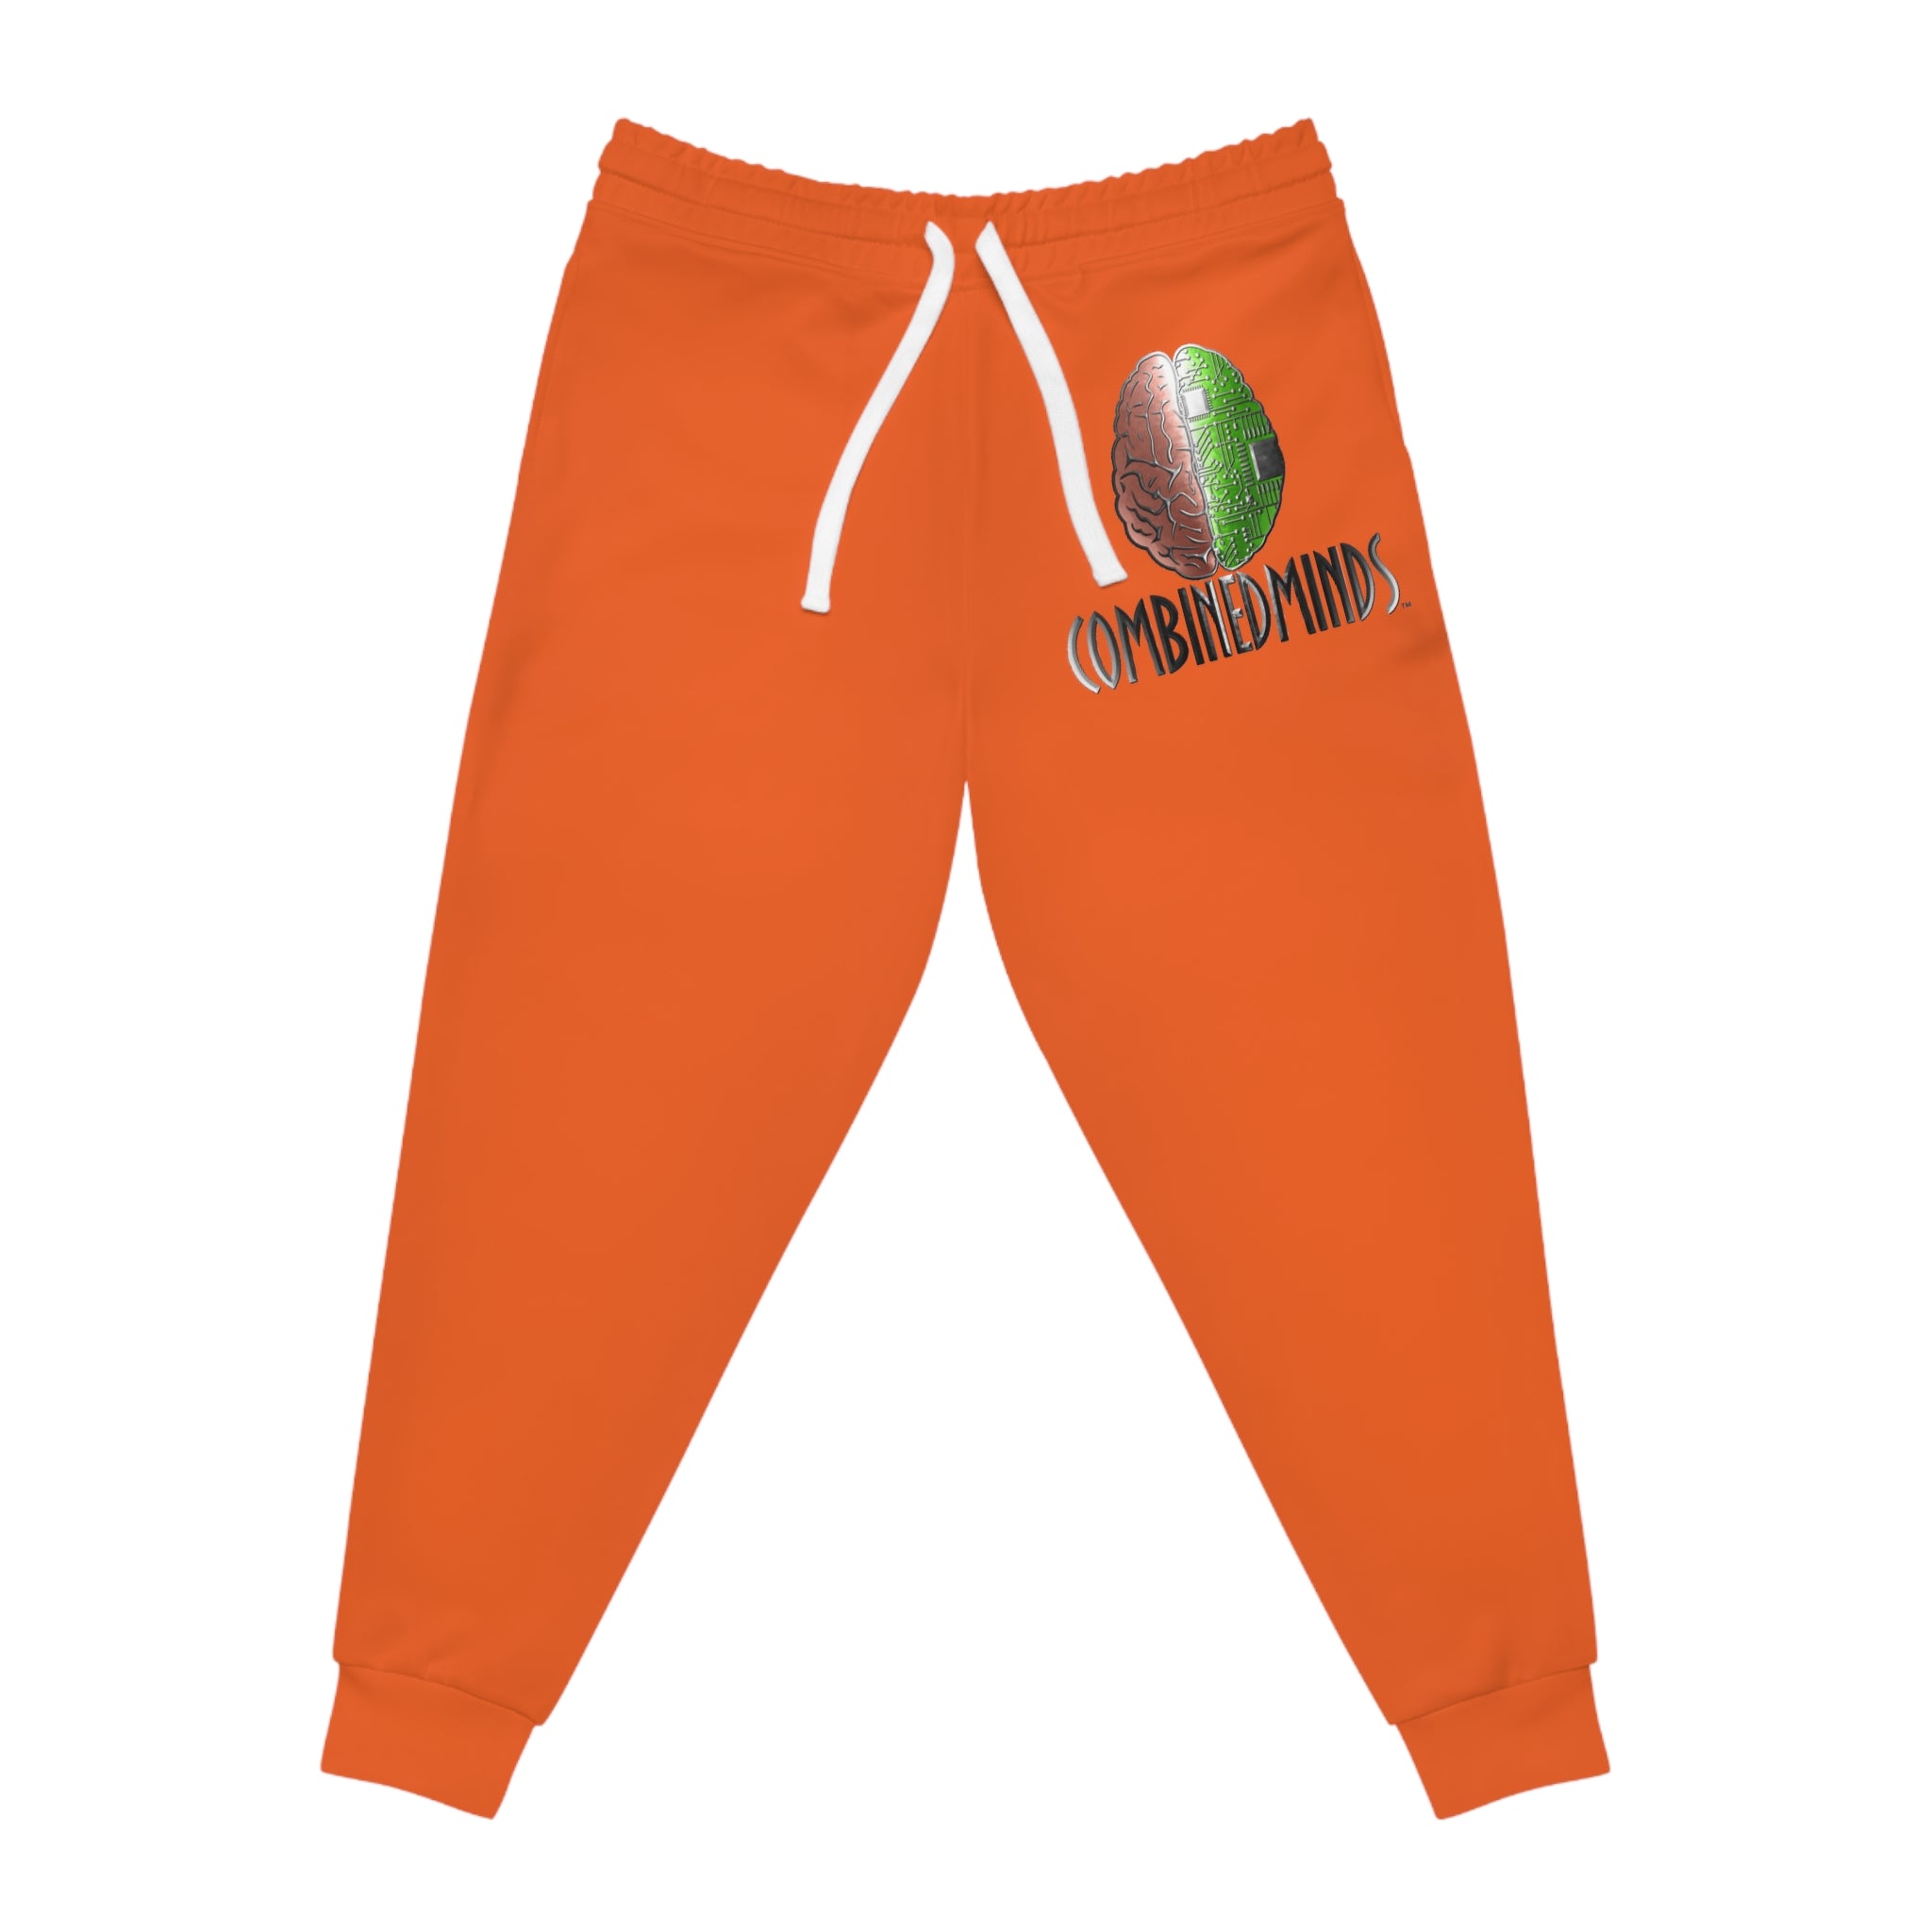 CombinedMinds Athletic Joggers Orange/Color Logo